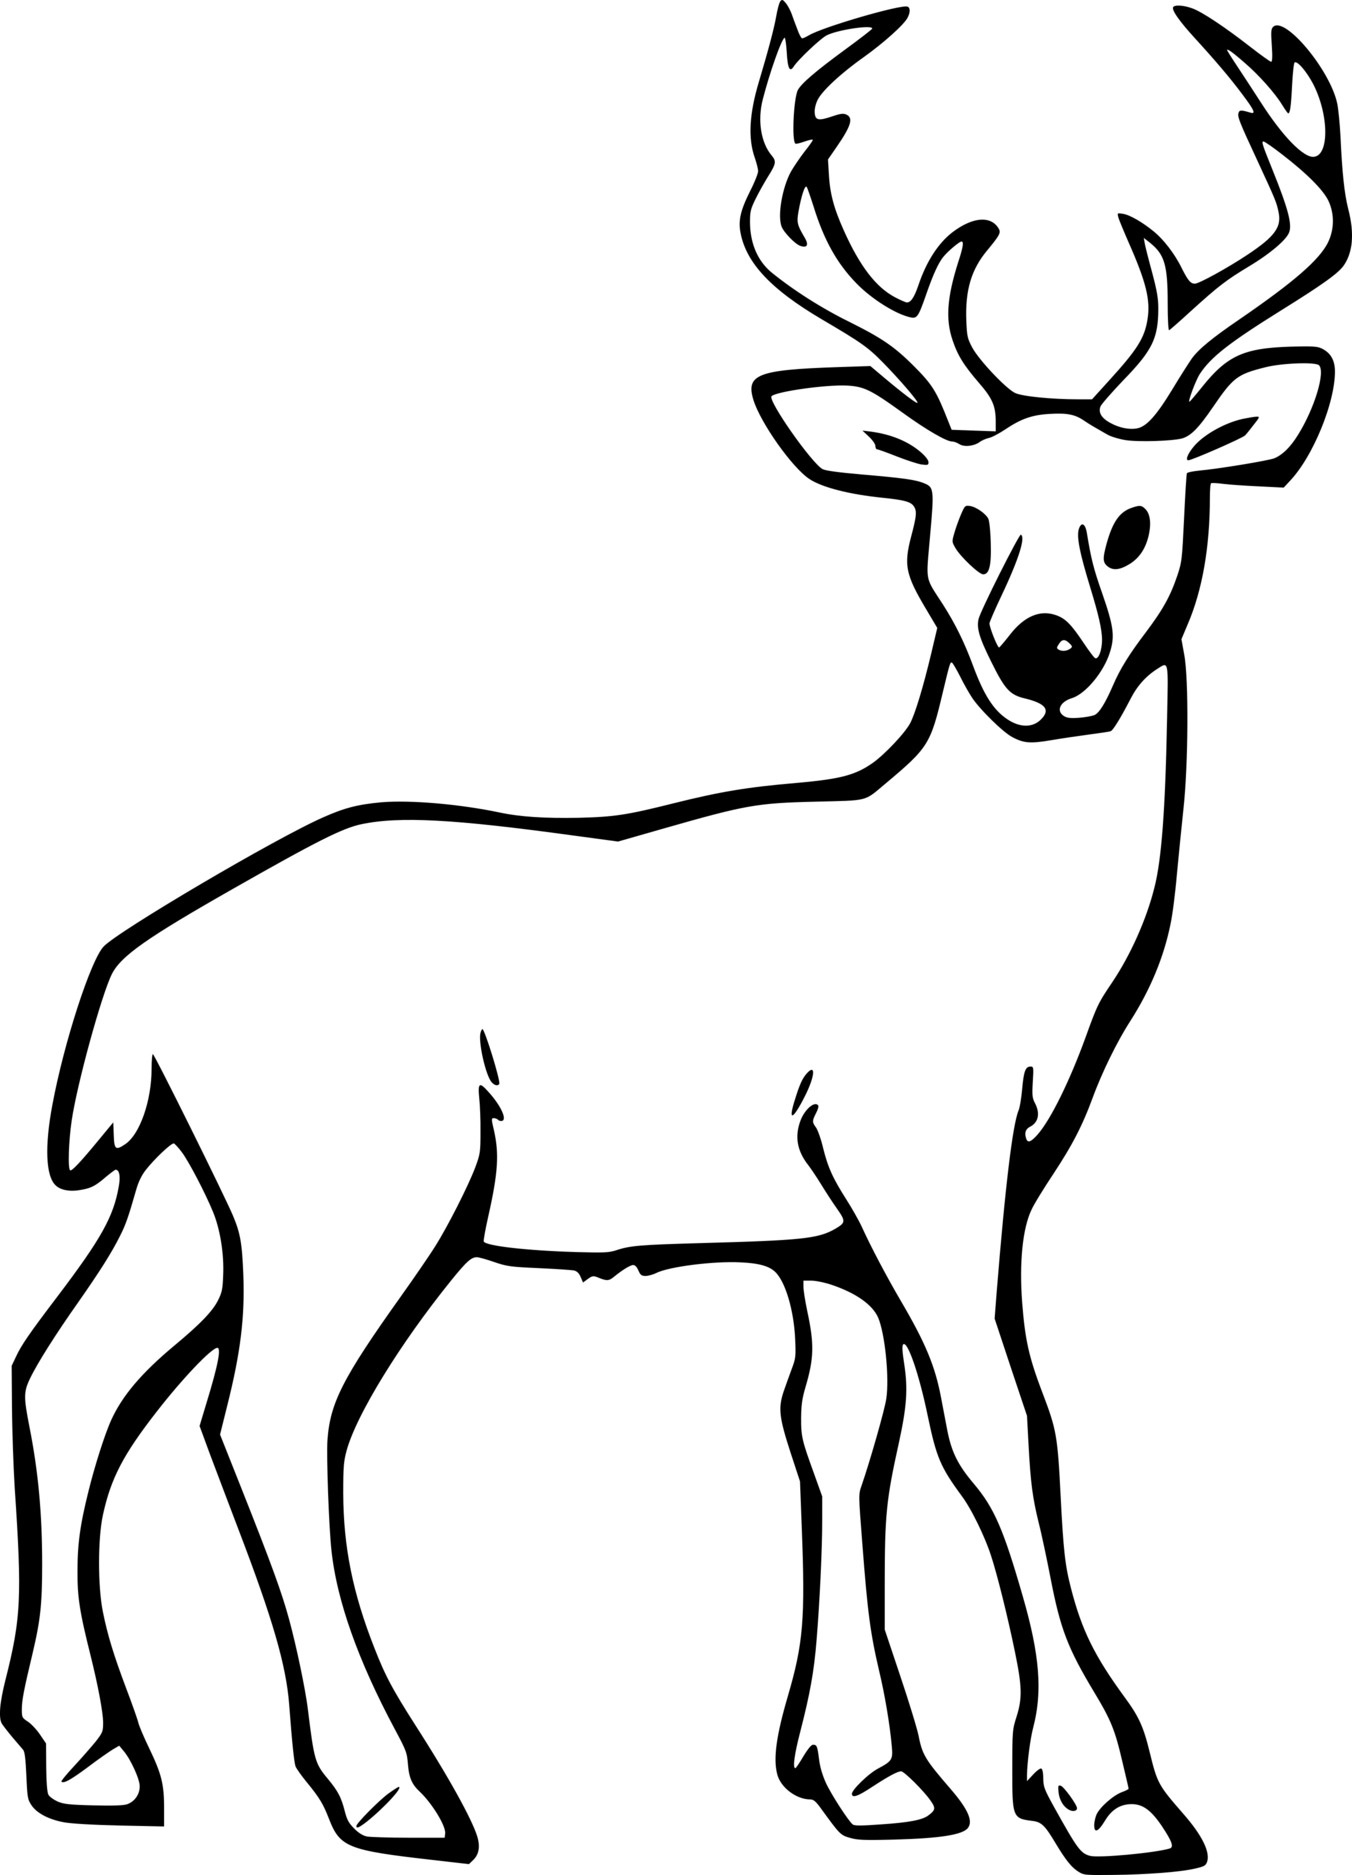 Simple Realistic Deer Coloring Page